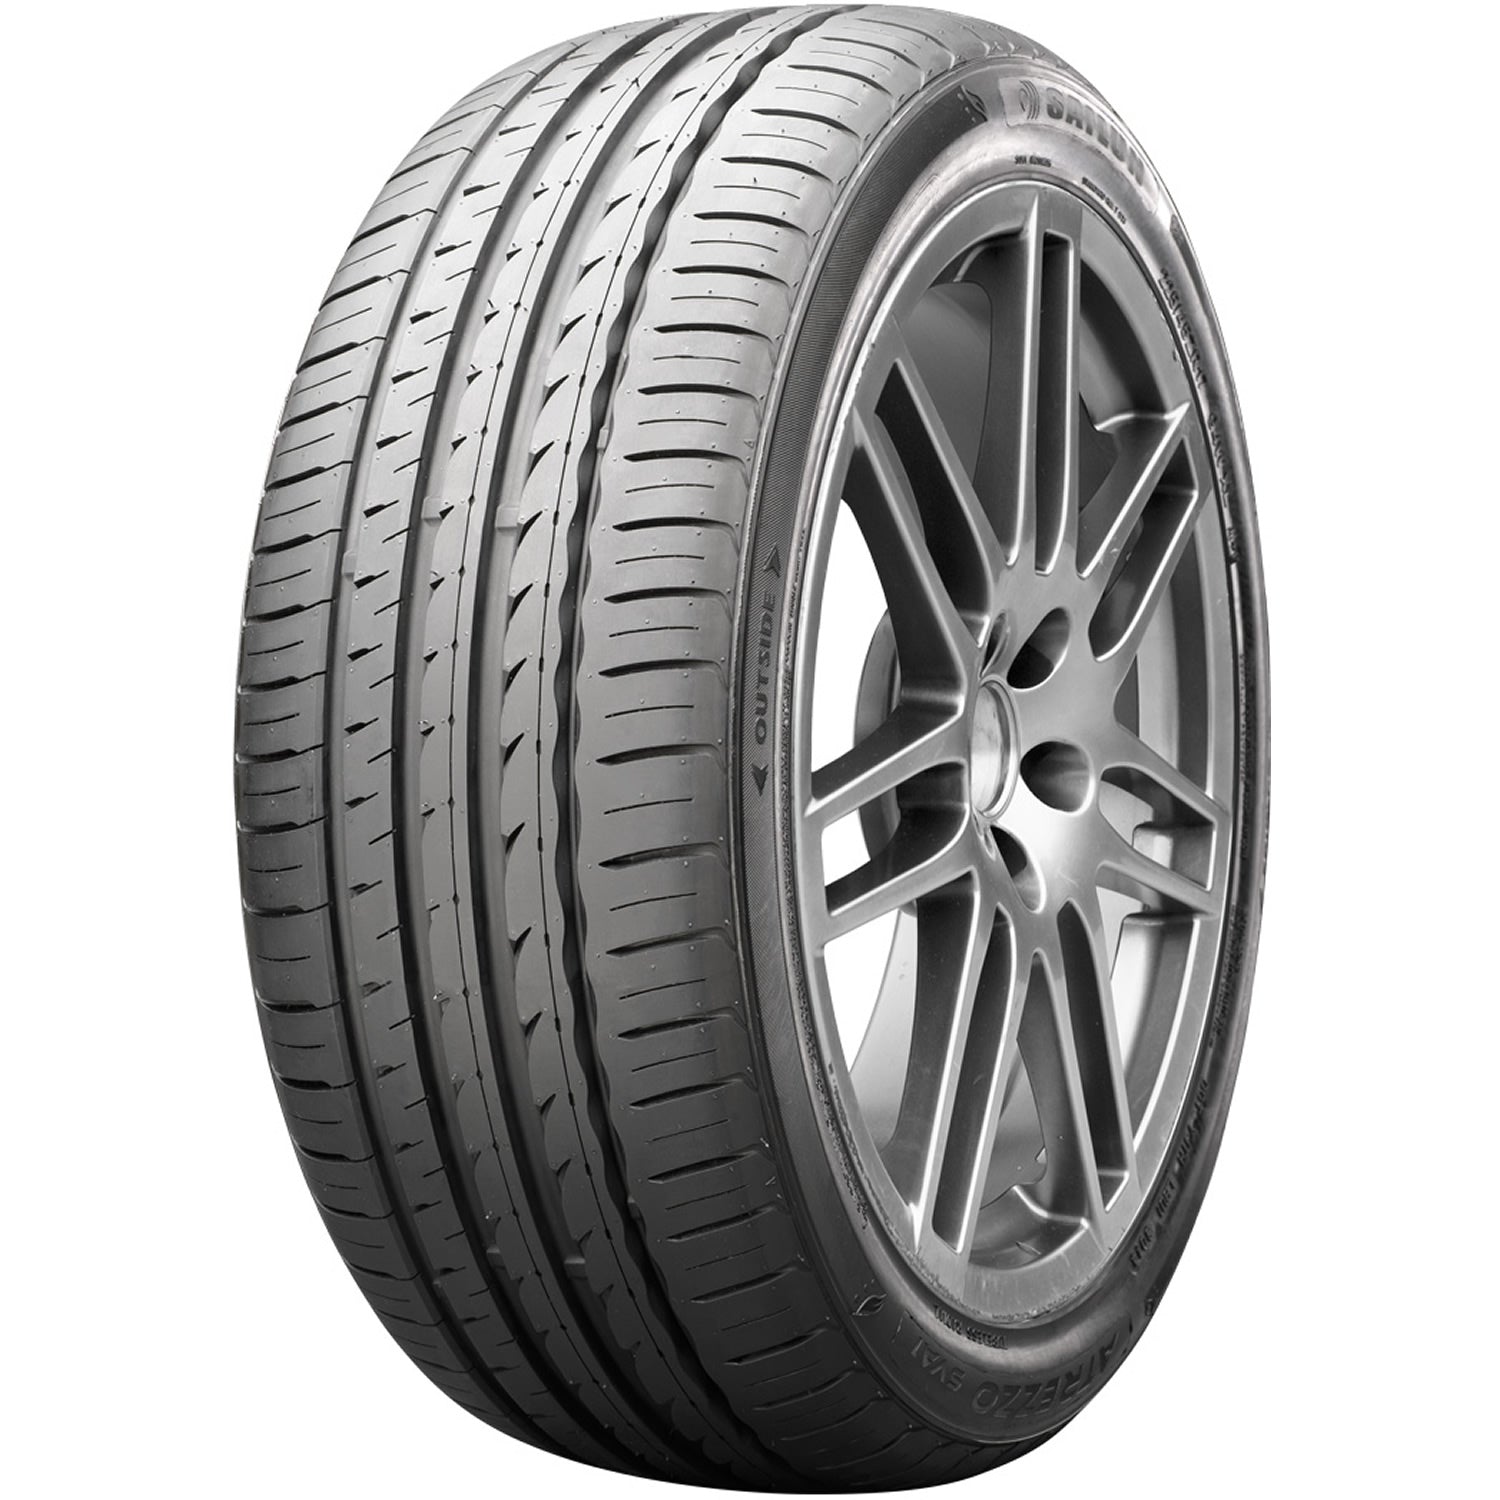 SAILUN ATREZZO SVA1 255/35R20 (27X10.2R 20) Tires